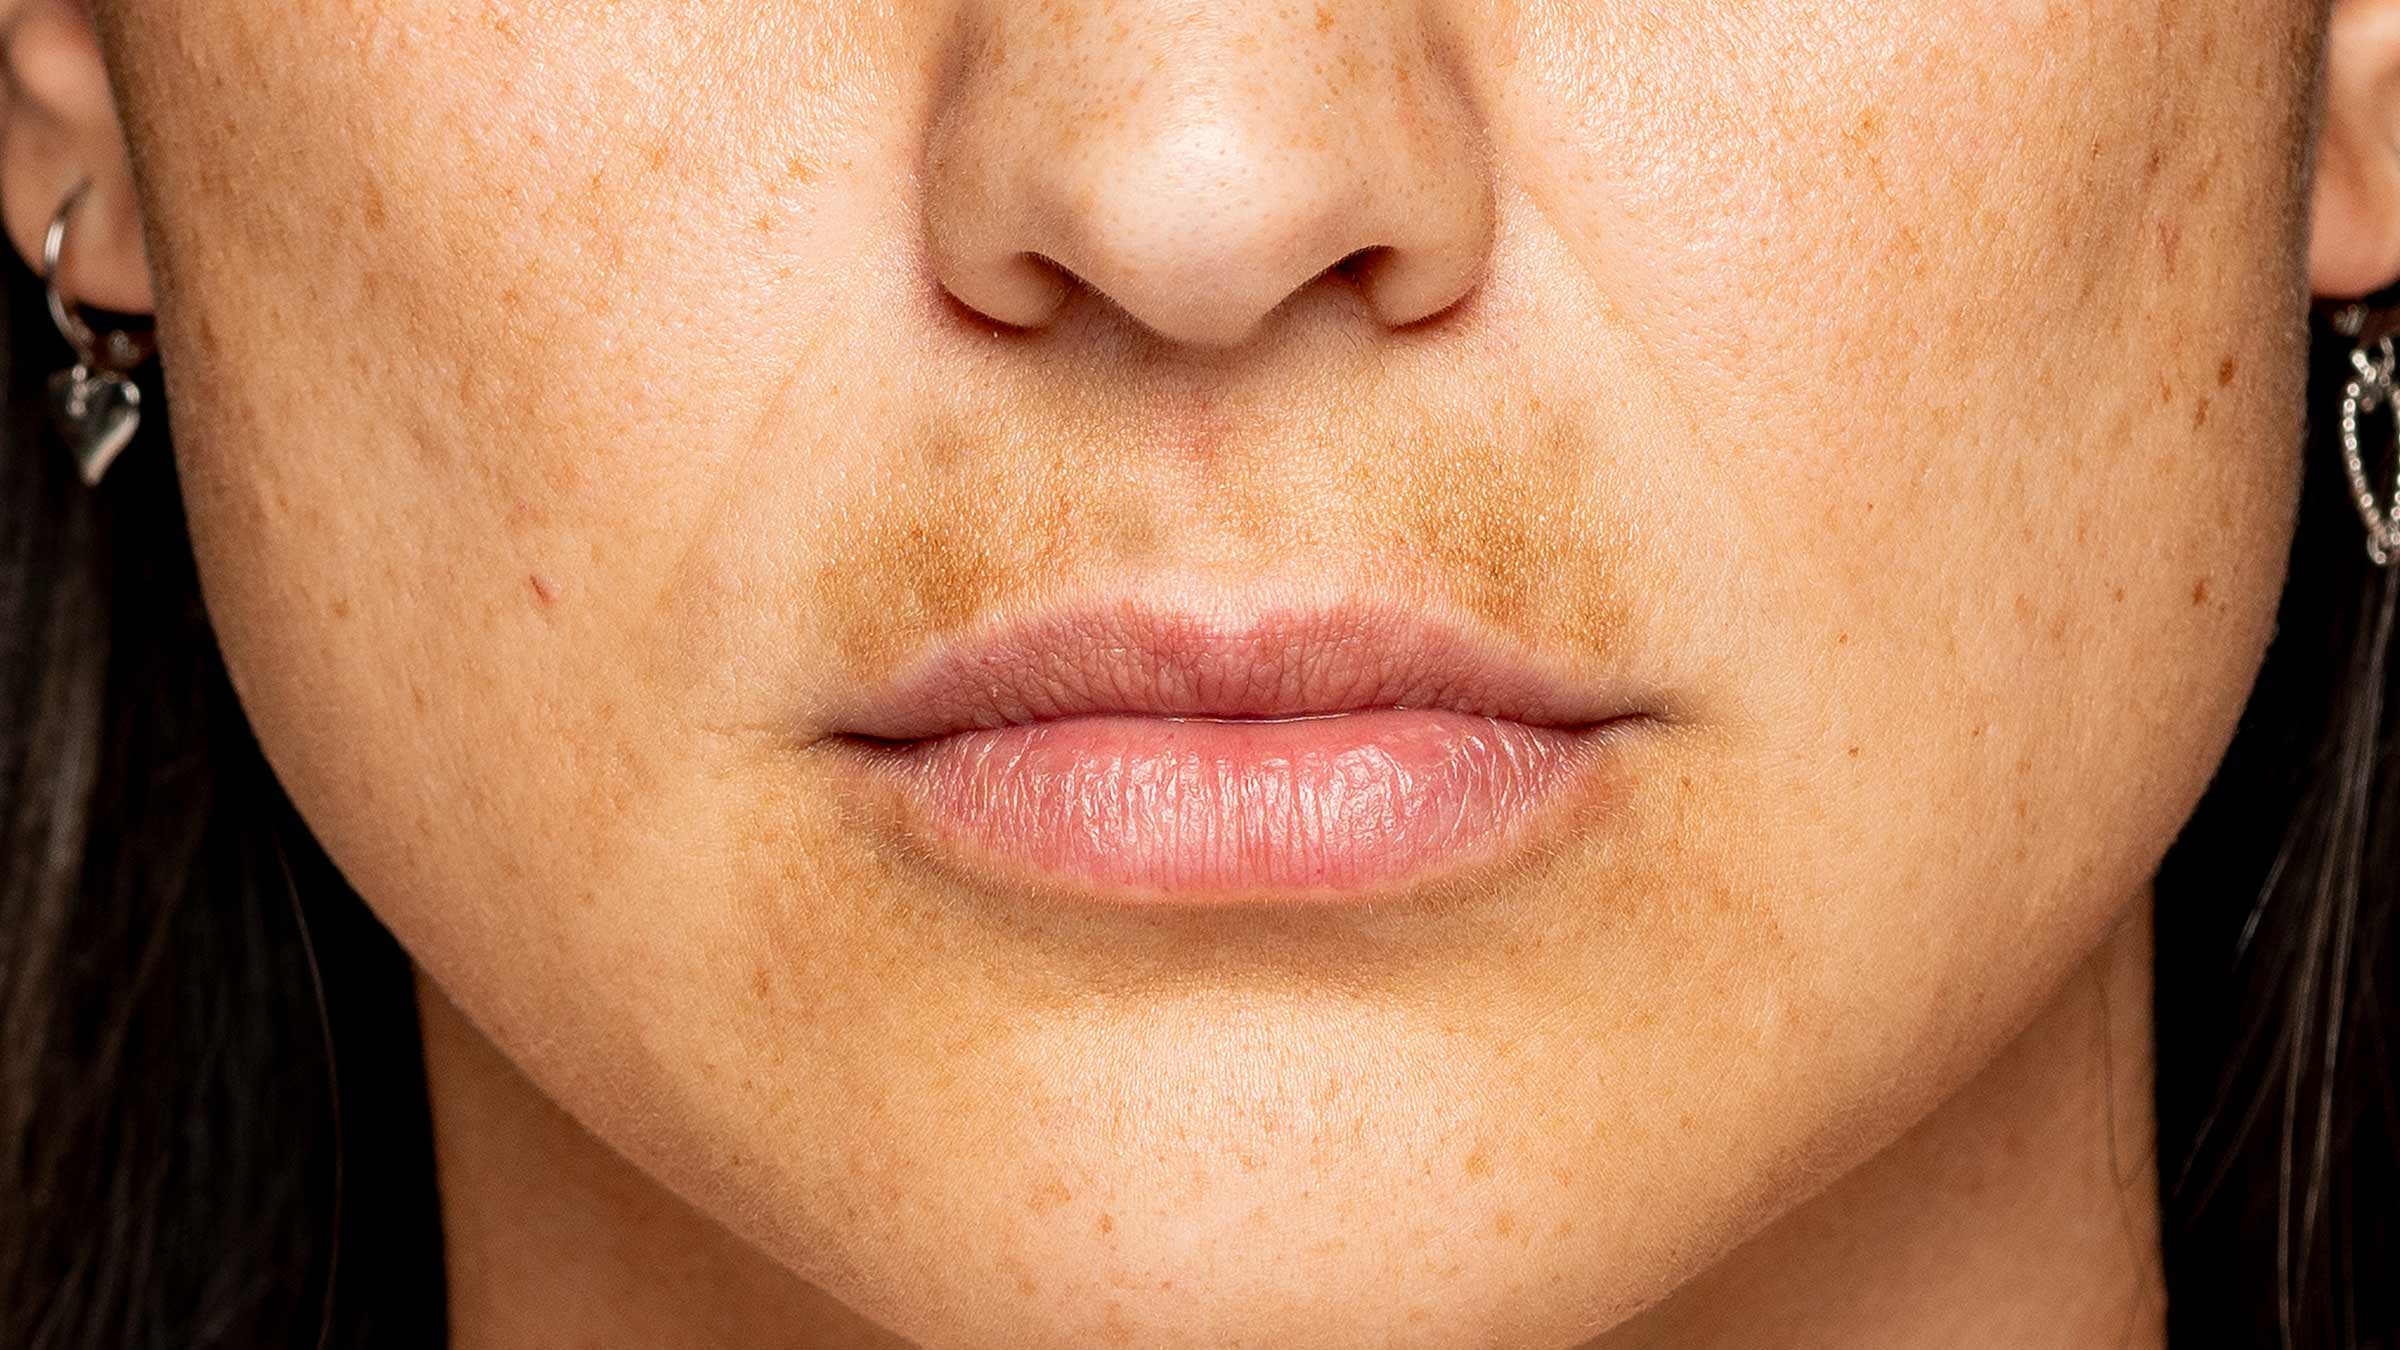 Woman with dark skin above lip, called Melasma Mustache